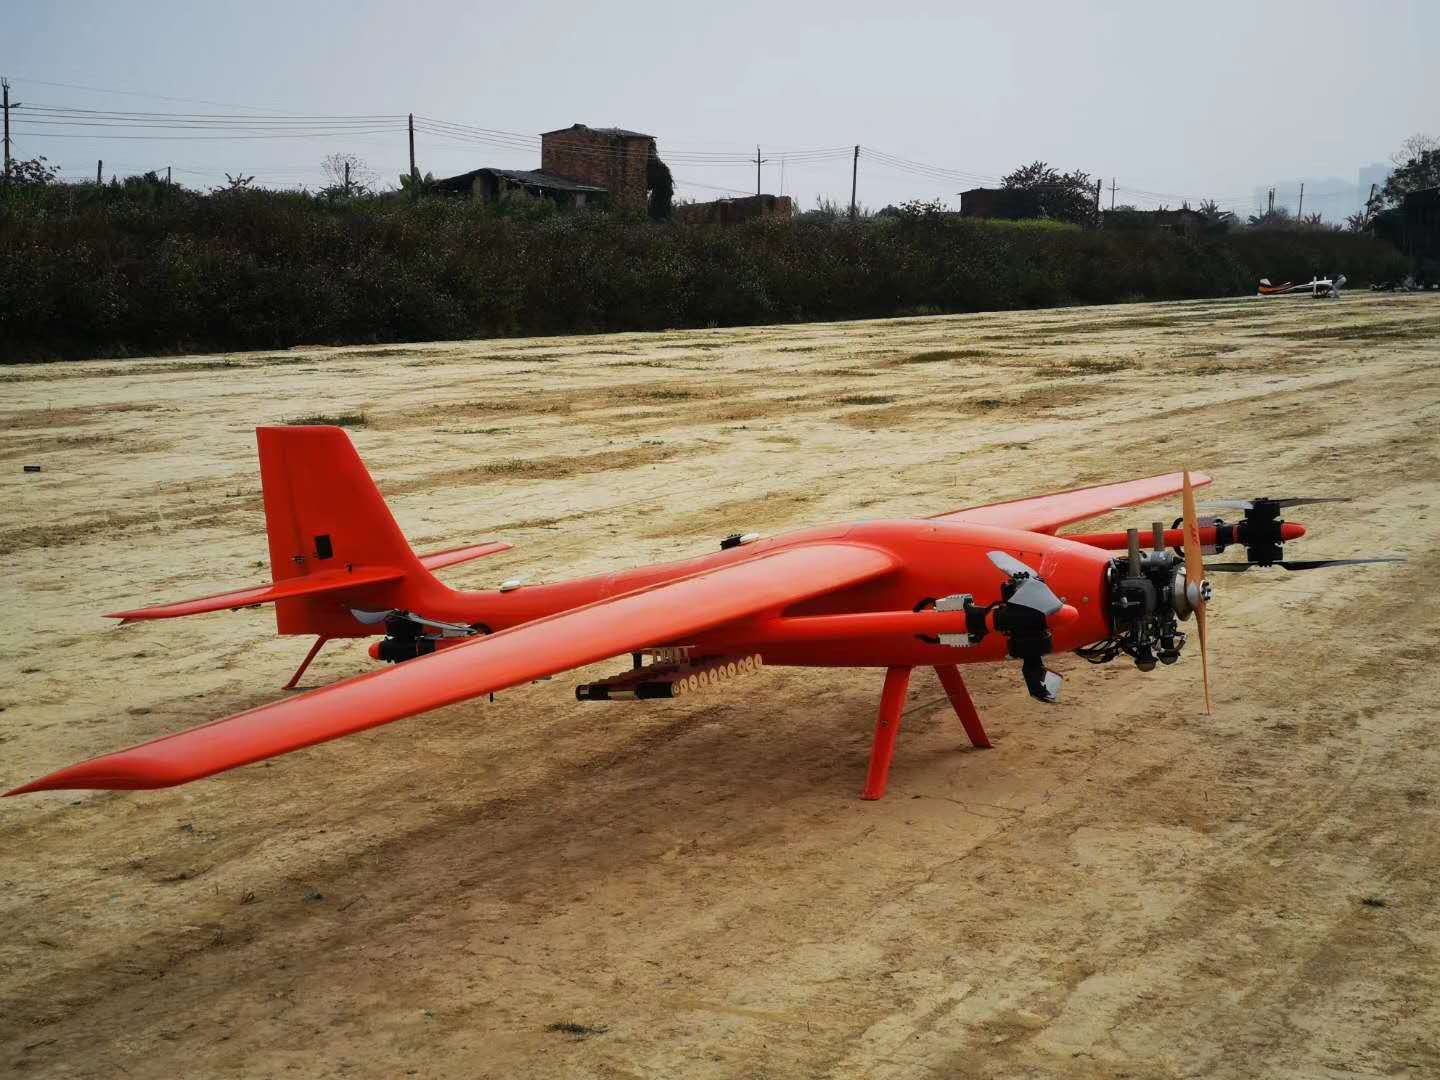 Fraud lime Feudal Payload 40kg heavey VTOL fixed wing UAV